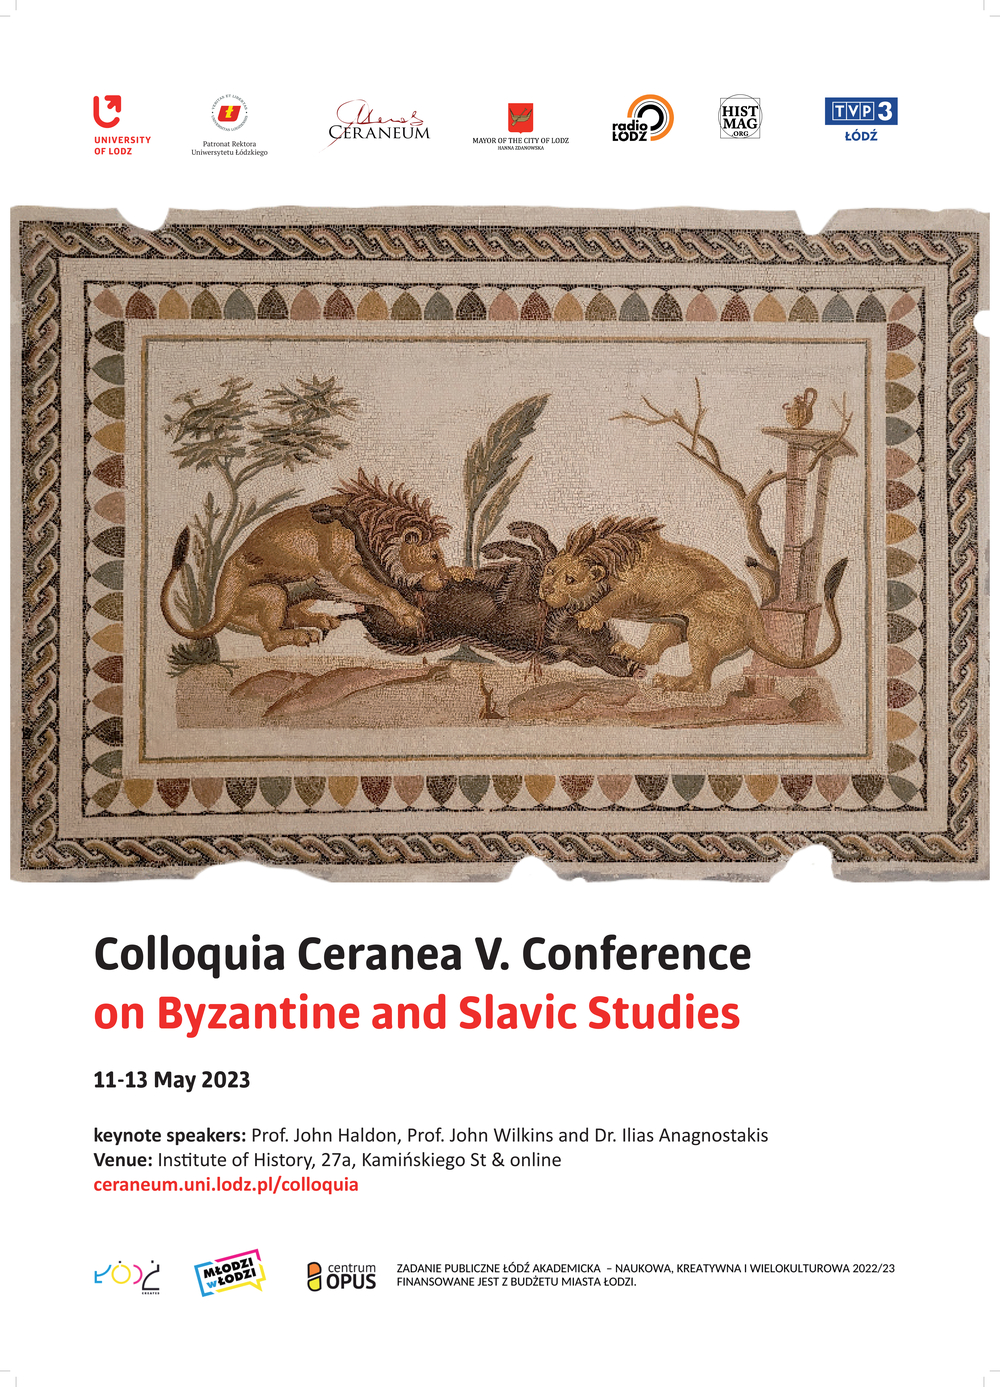 plakat konferencji Colloquia Ceranea